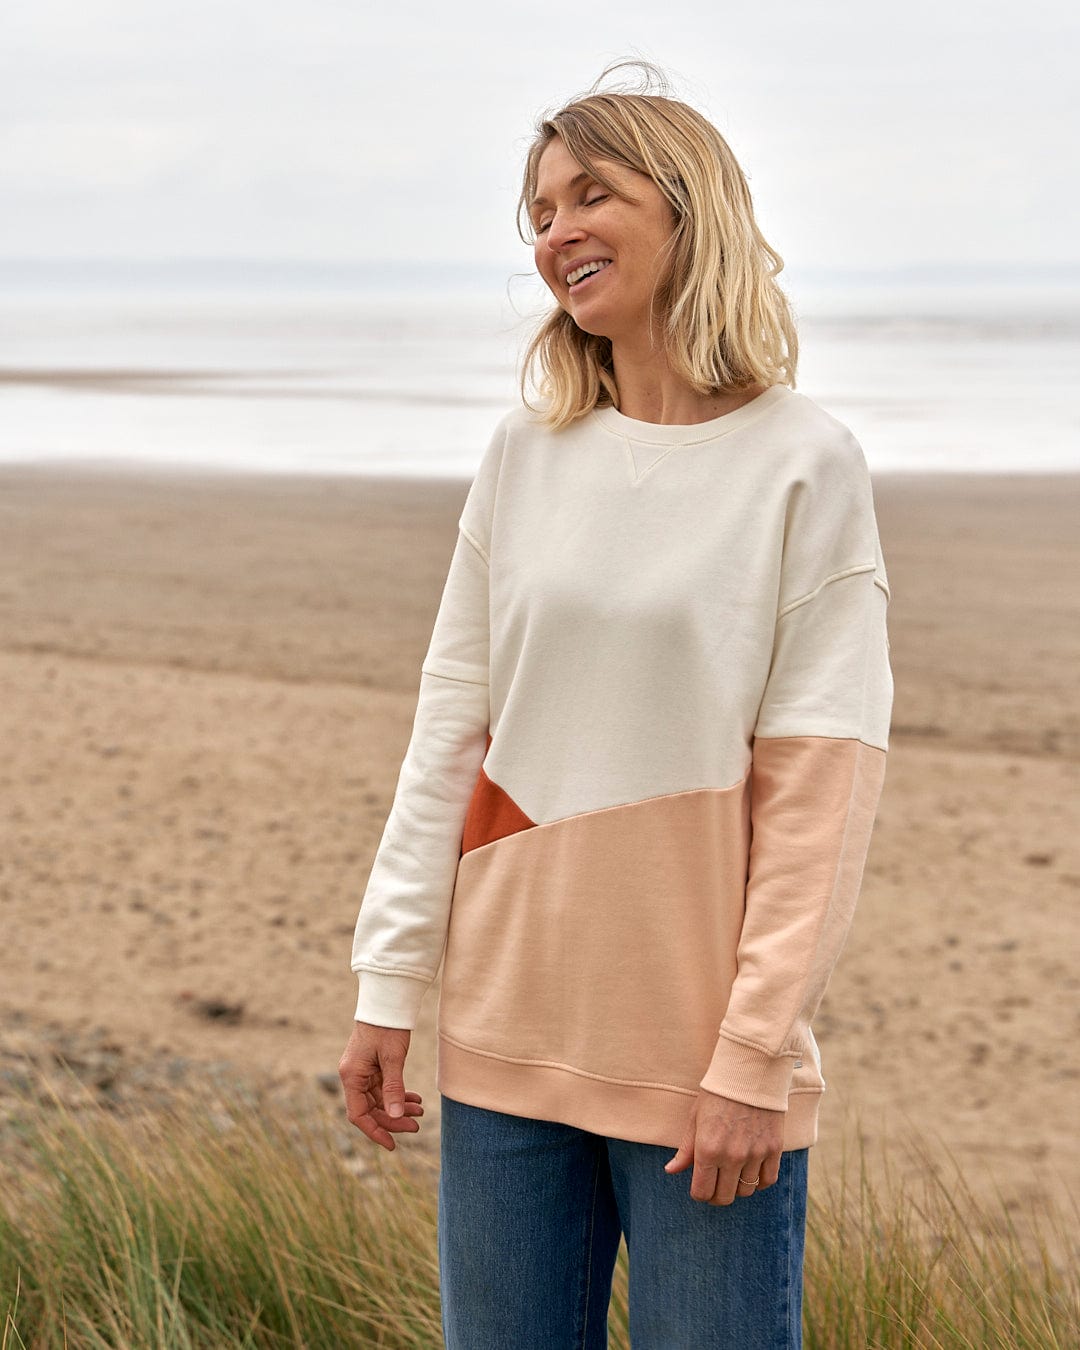 A woman standing on a beach wearing a Saltrock Sofie - Womens Boyfriend Fit Sweat - Light Orange/Cream sweater.